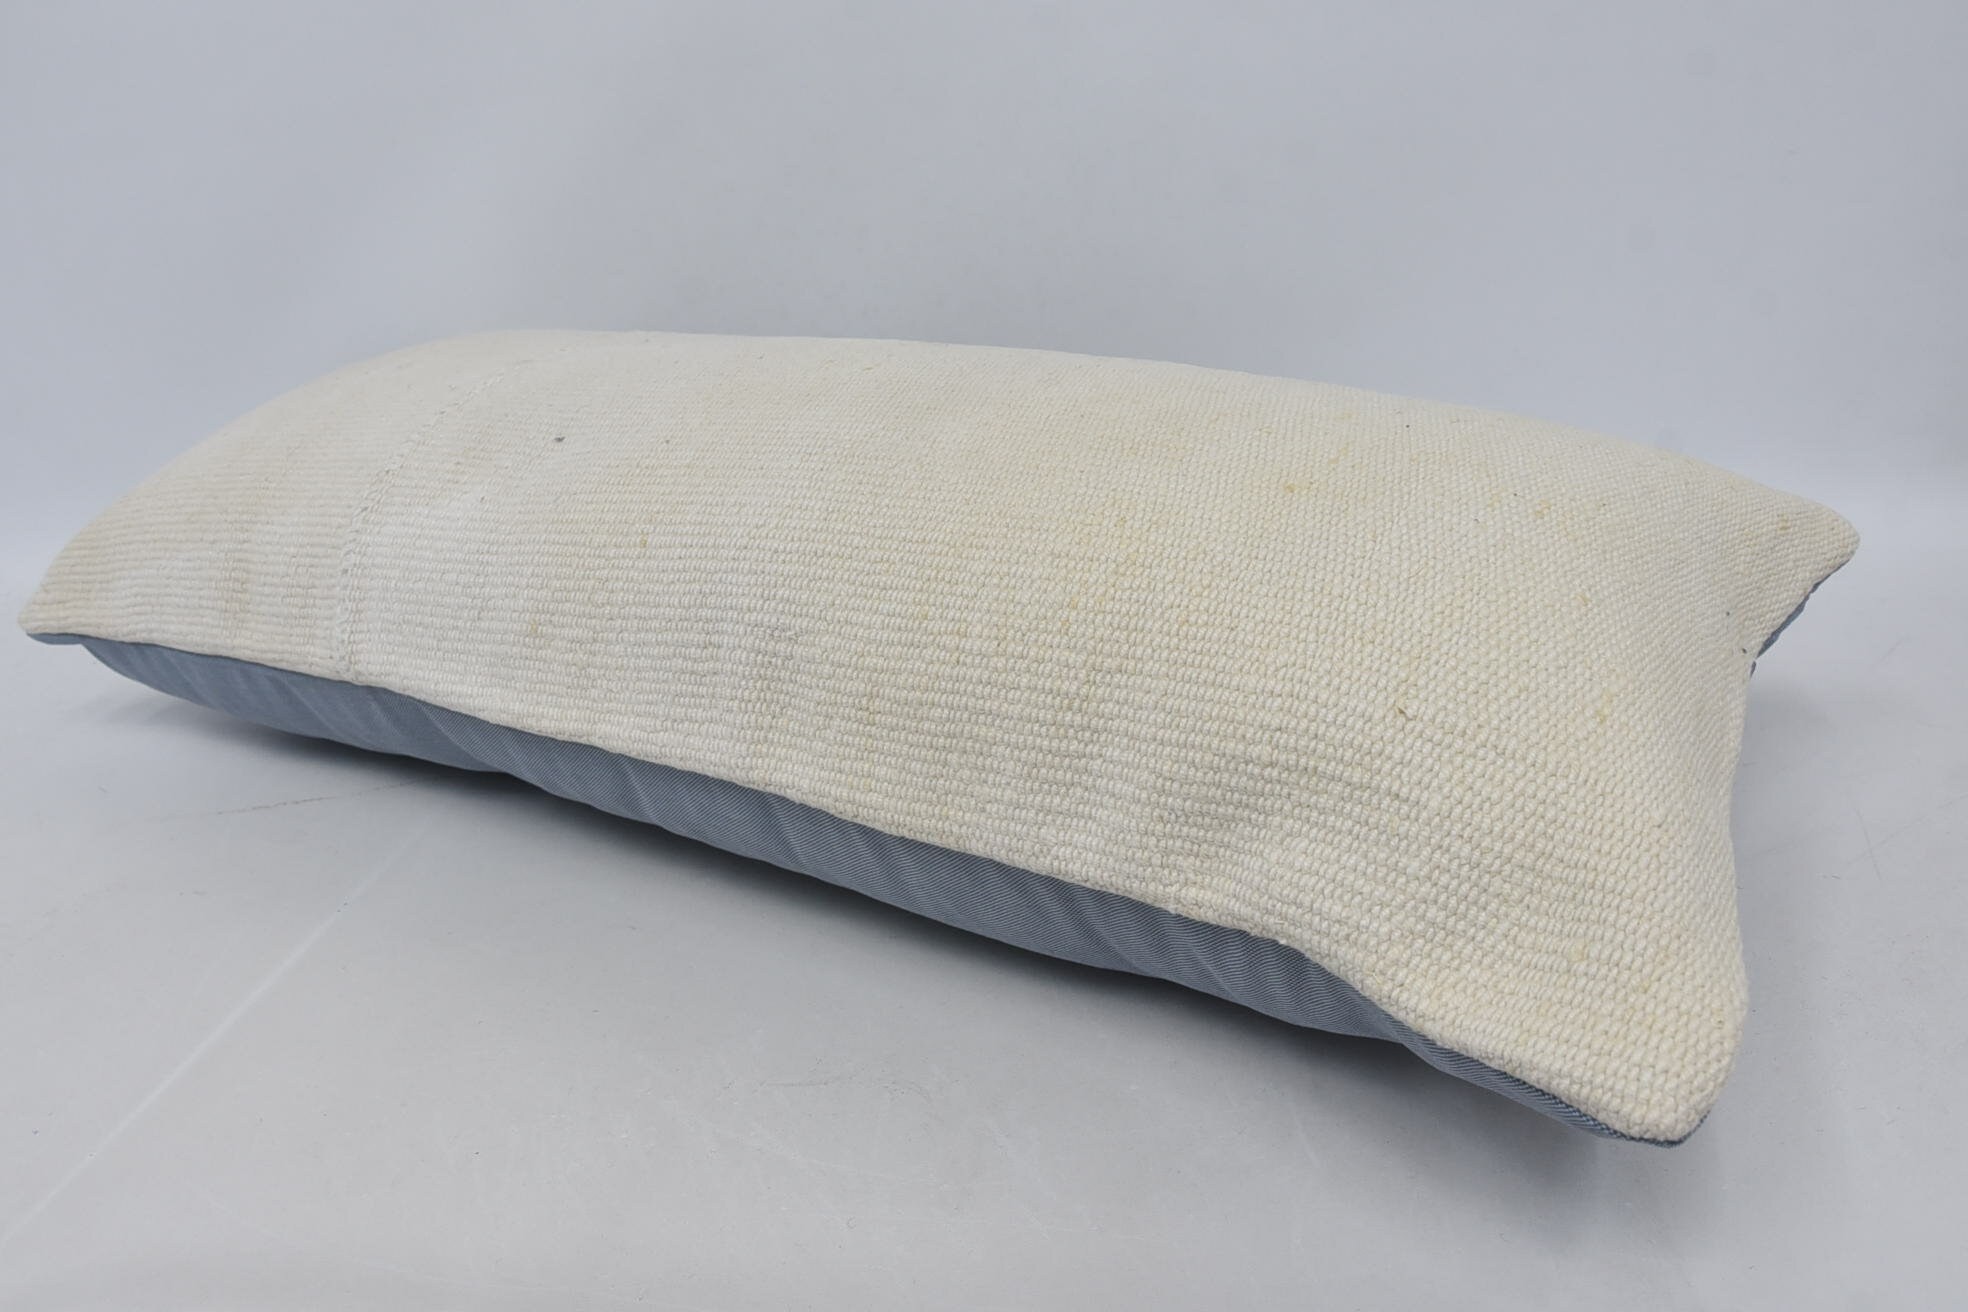 Seat Pillow, Vintage Kilim Pillow, 16"x36" Brown Pillow Case, Decorative Pillow Sham, Ethnical Kilim Rug Pillow, Handmade Kilim Cushion